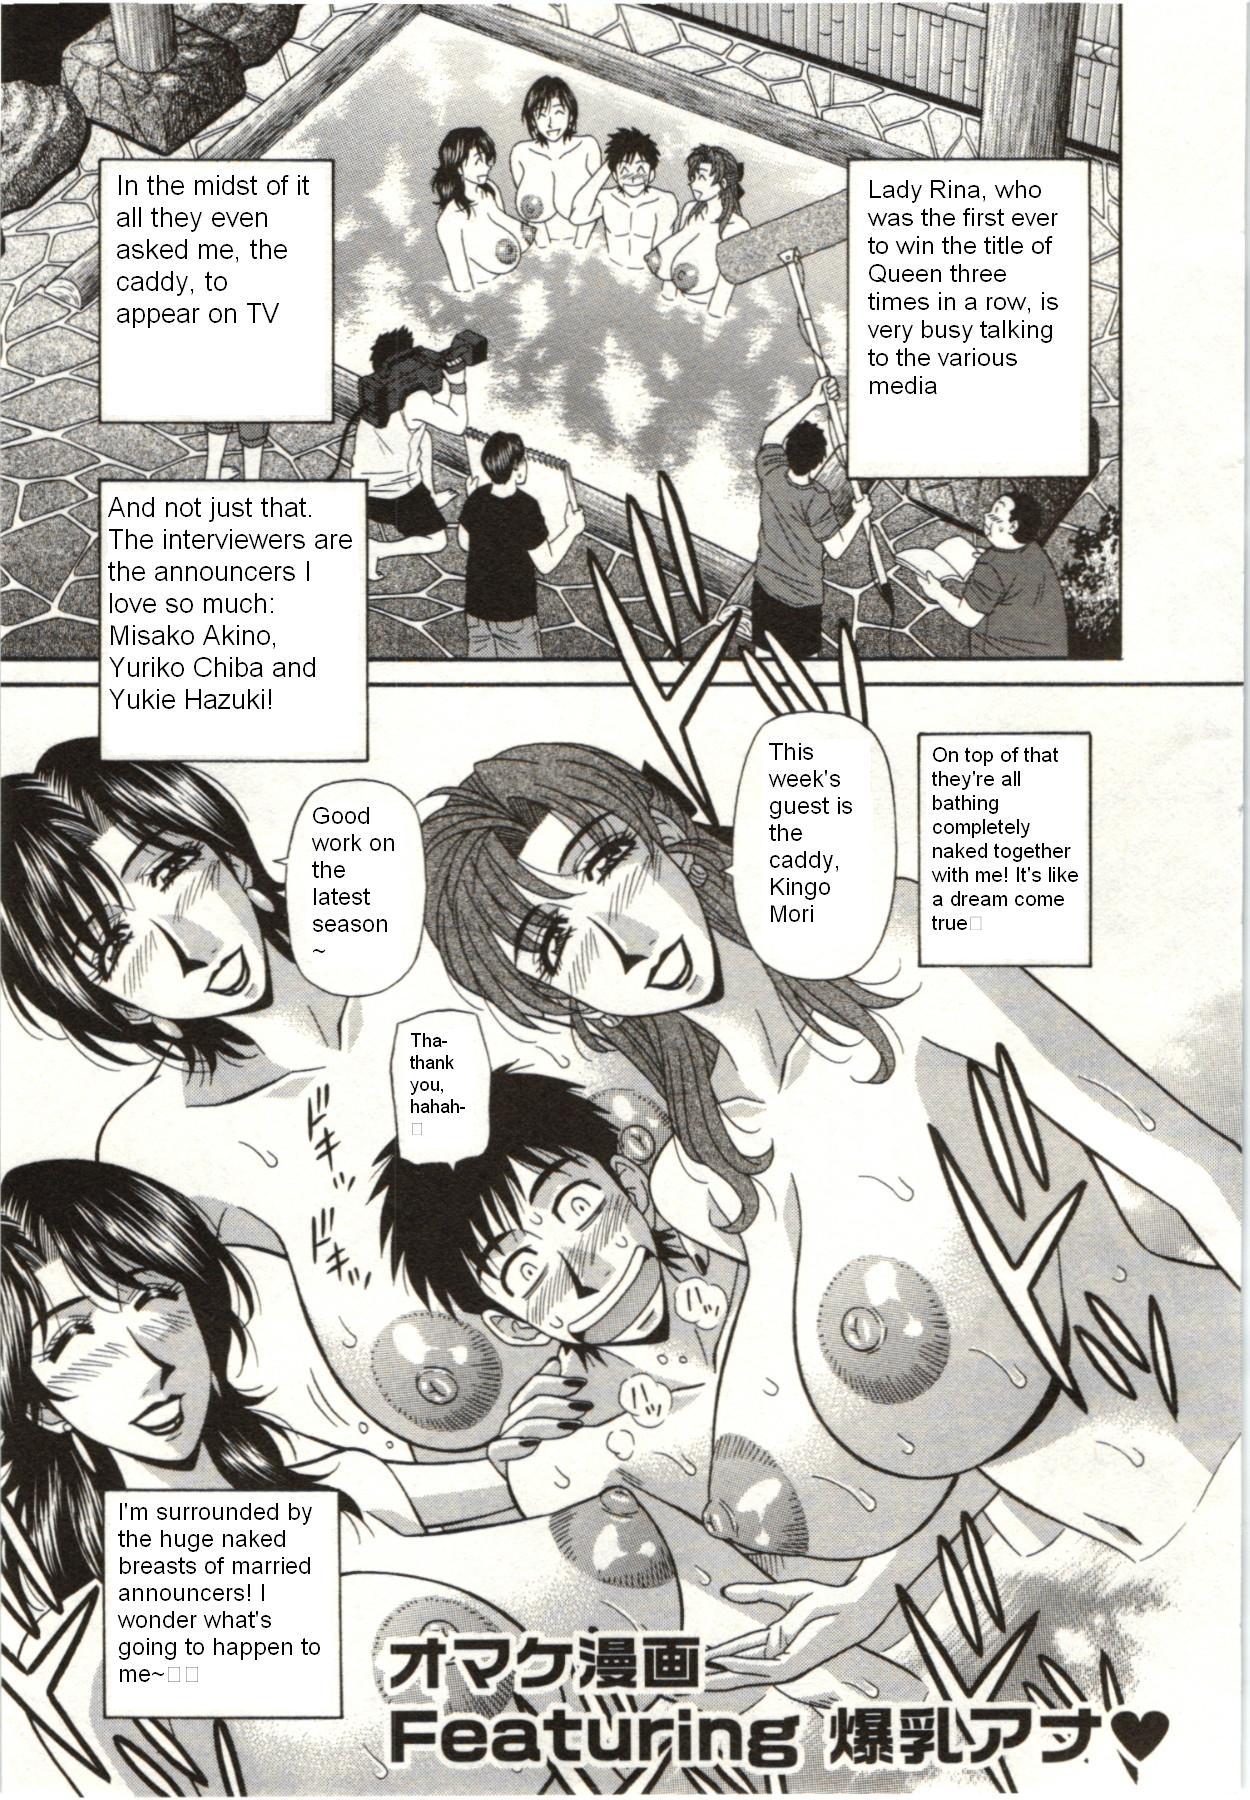 Omake Manga Featuring Bakunyuu Ana 1